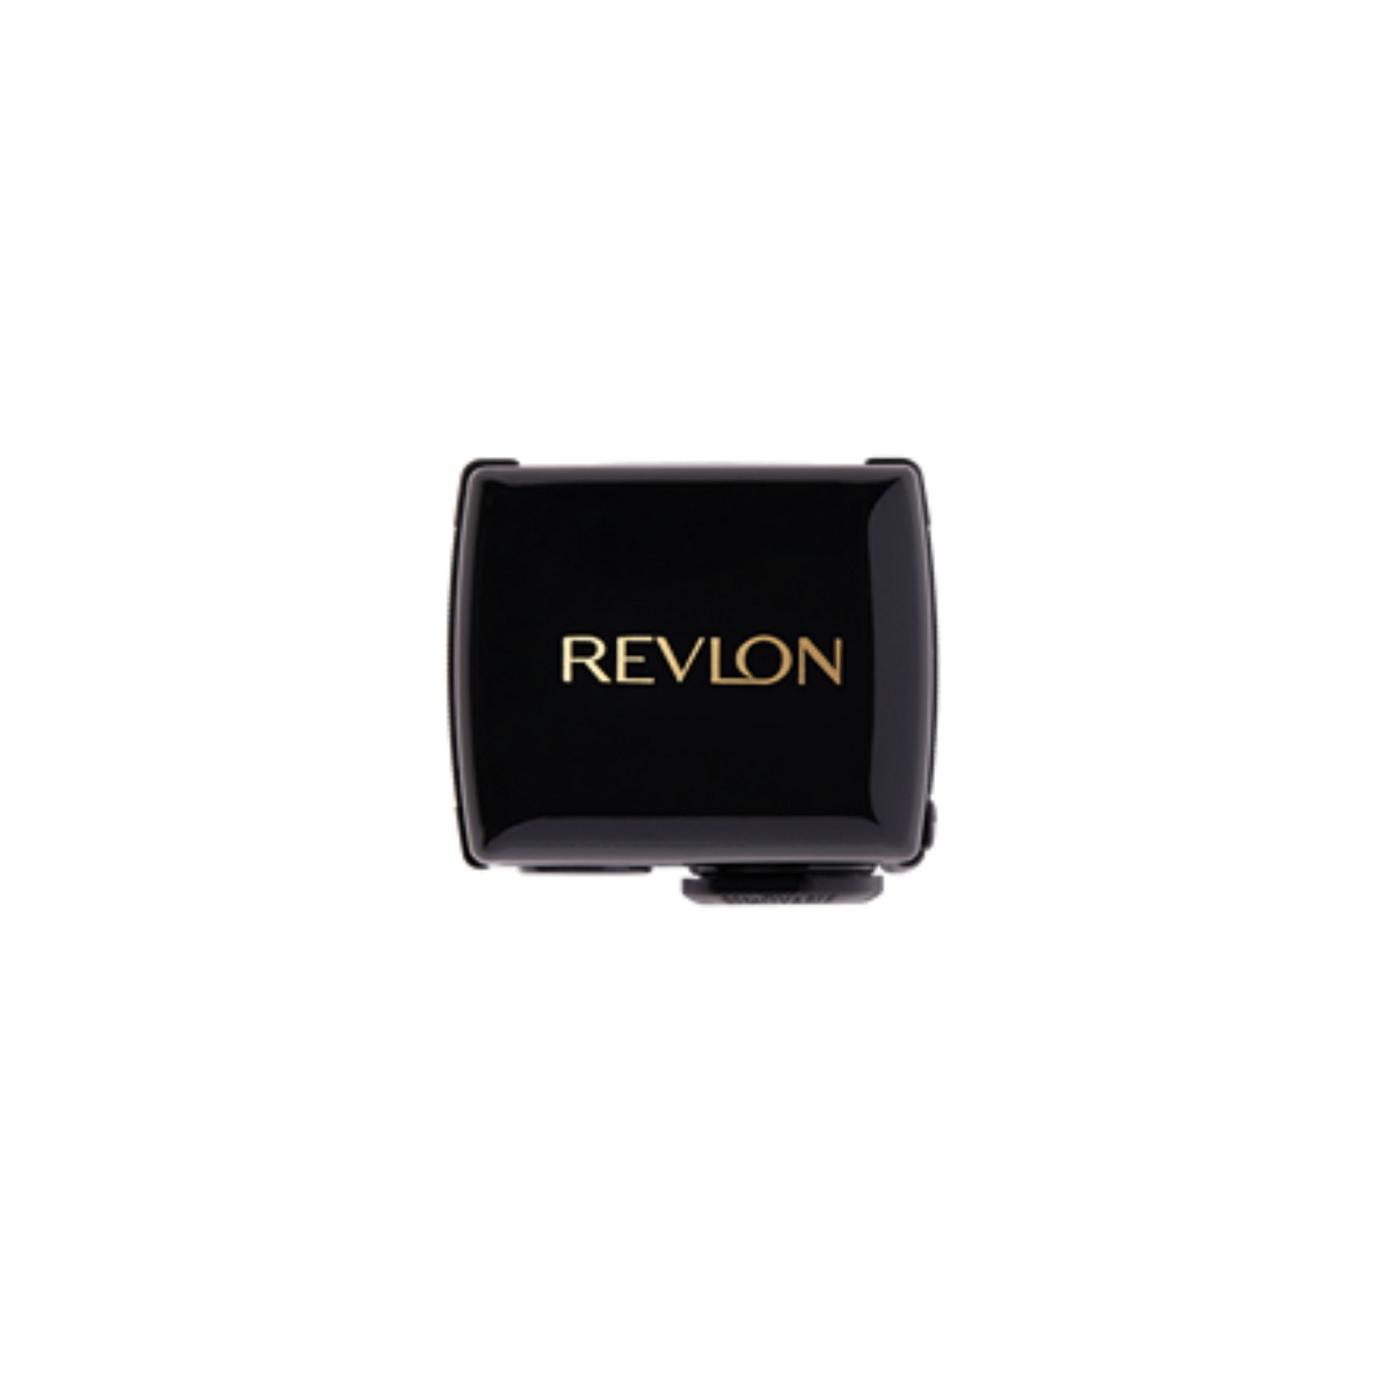 Revlon Universal Points Sharpener; image 2 of 7